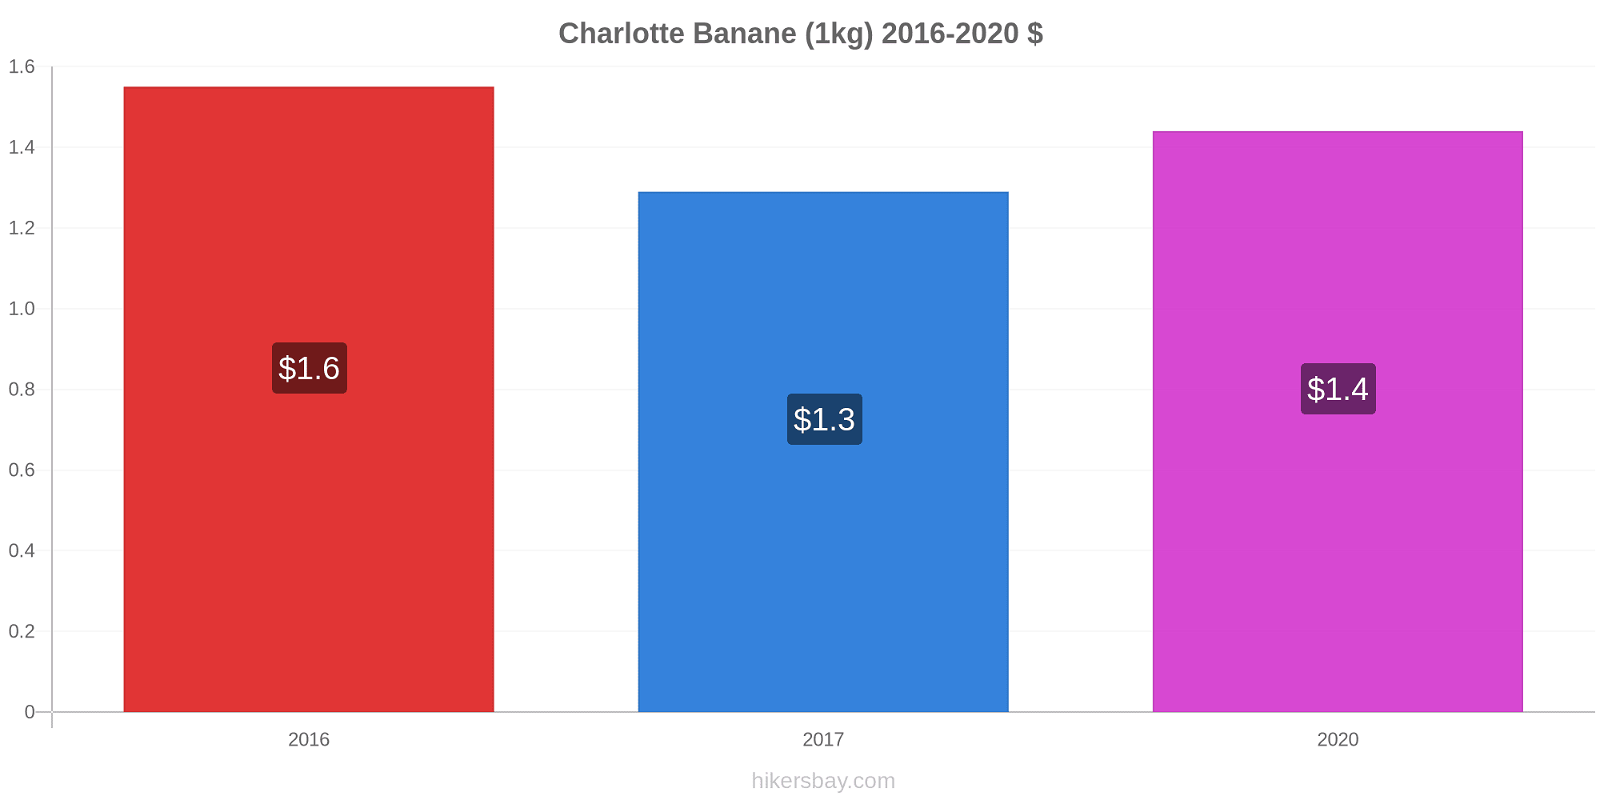 Charlotte variazioni di prezzo Banana (1kg) hikersbay.com